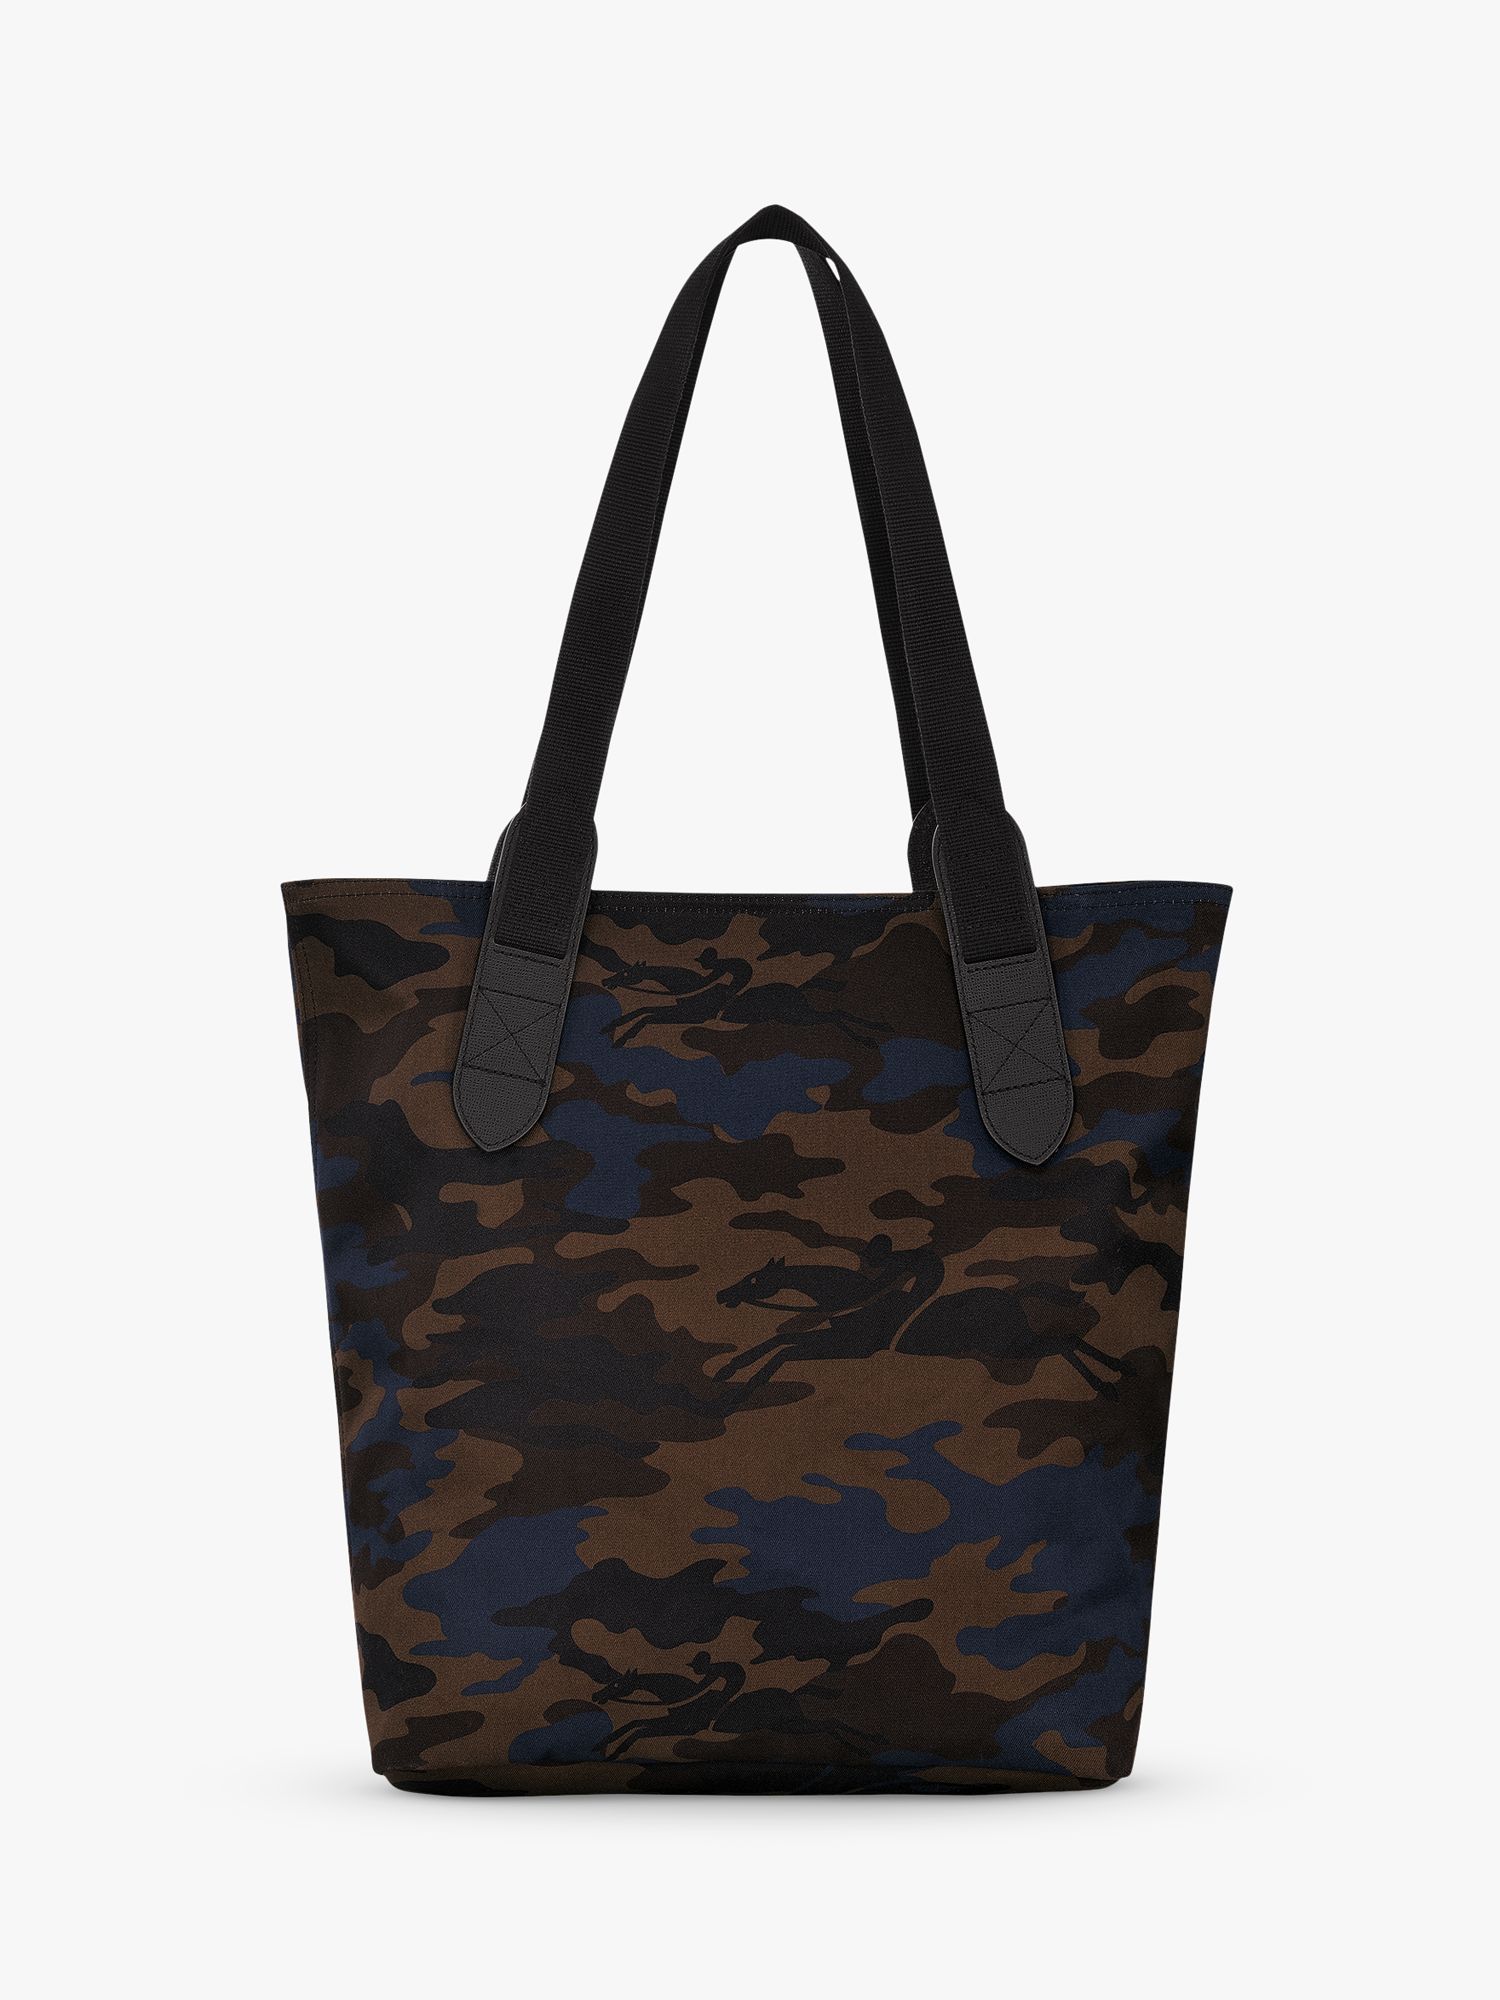 Longchamp Gabin Canvas Tote Bag, Navy/Multi at John Lewis & Partners